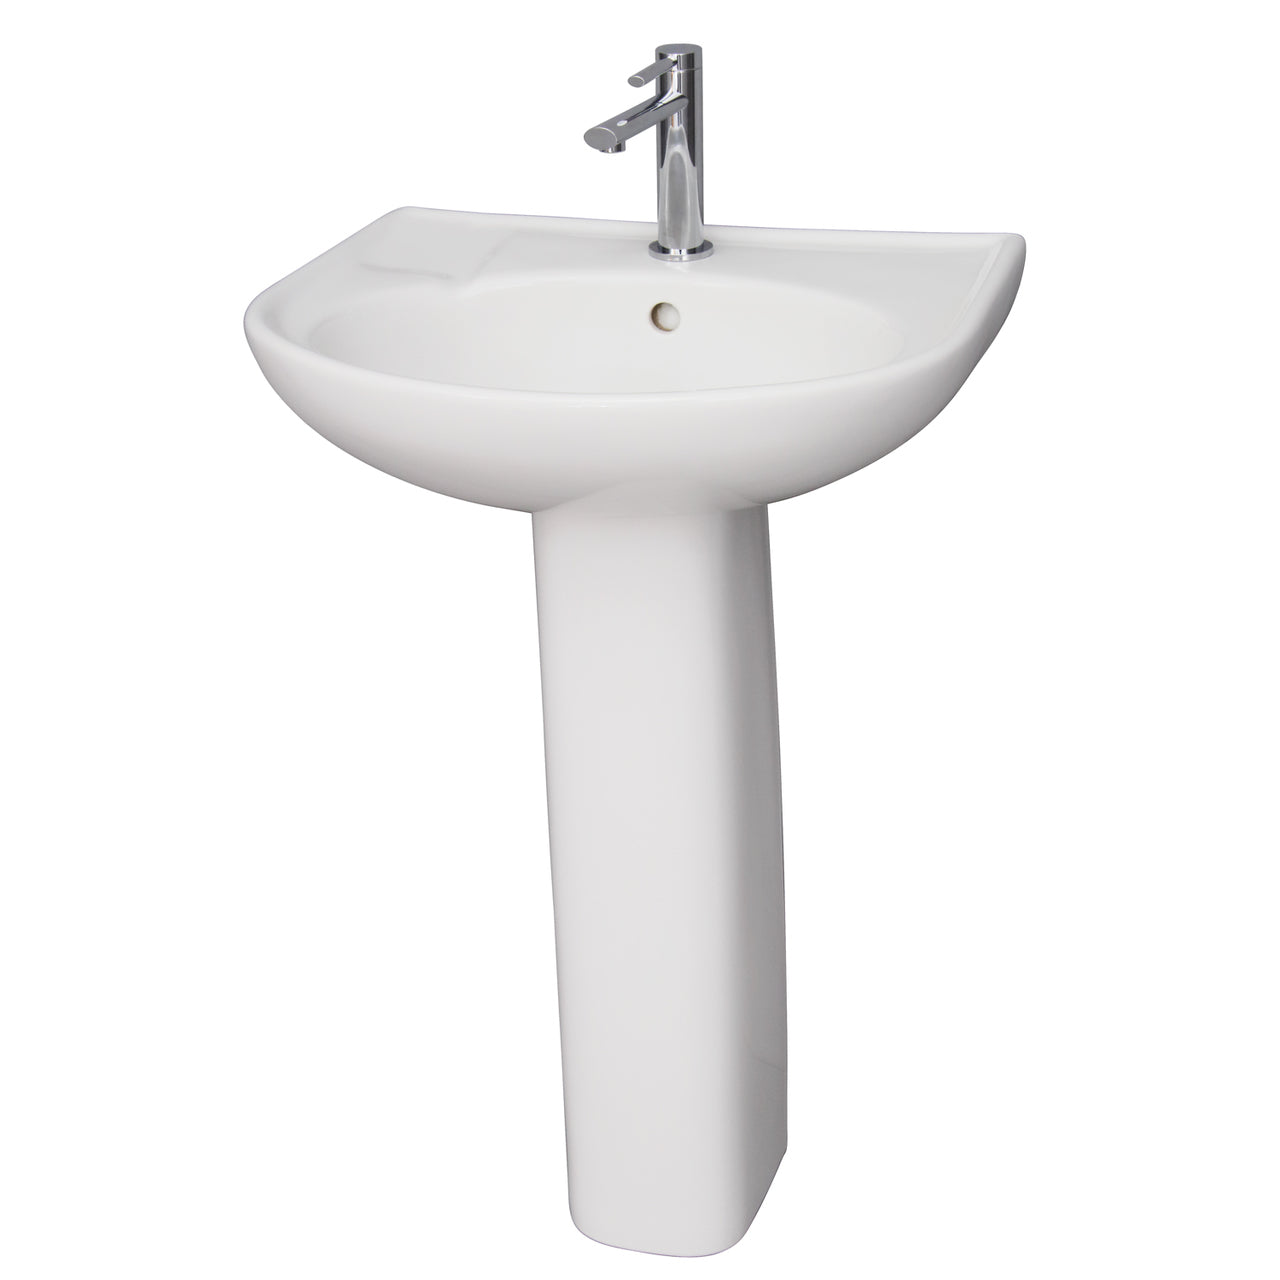 Cynthia 570 Pedestal Bathroom Sink White for 1-Hole Faucet